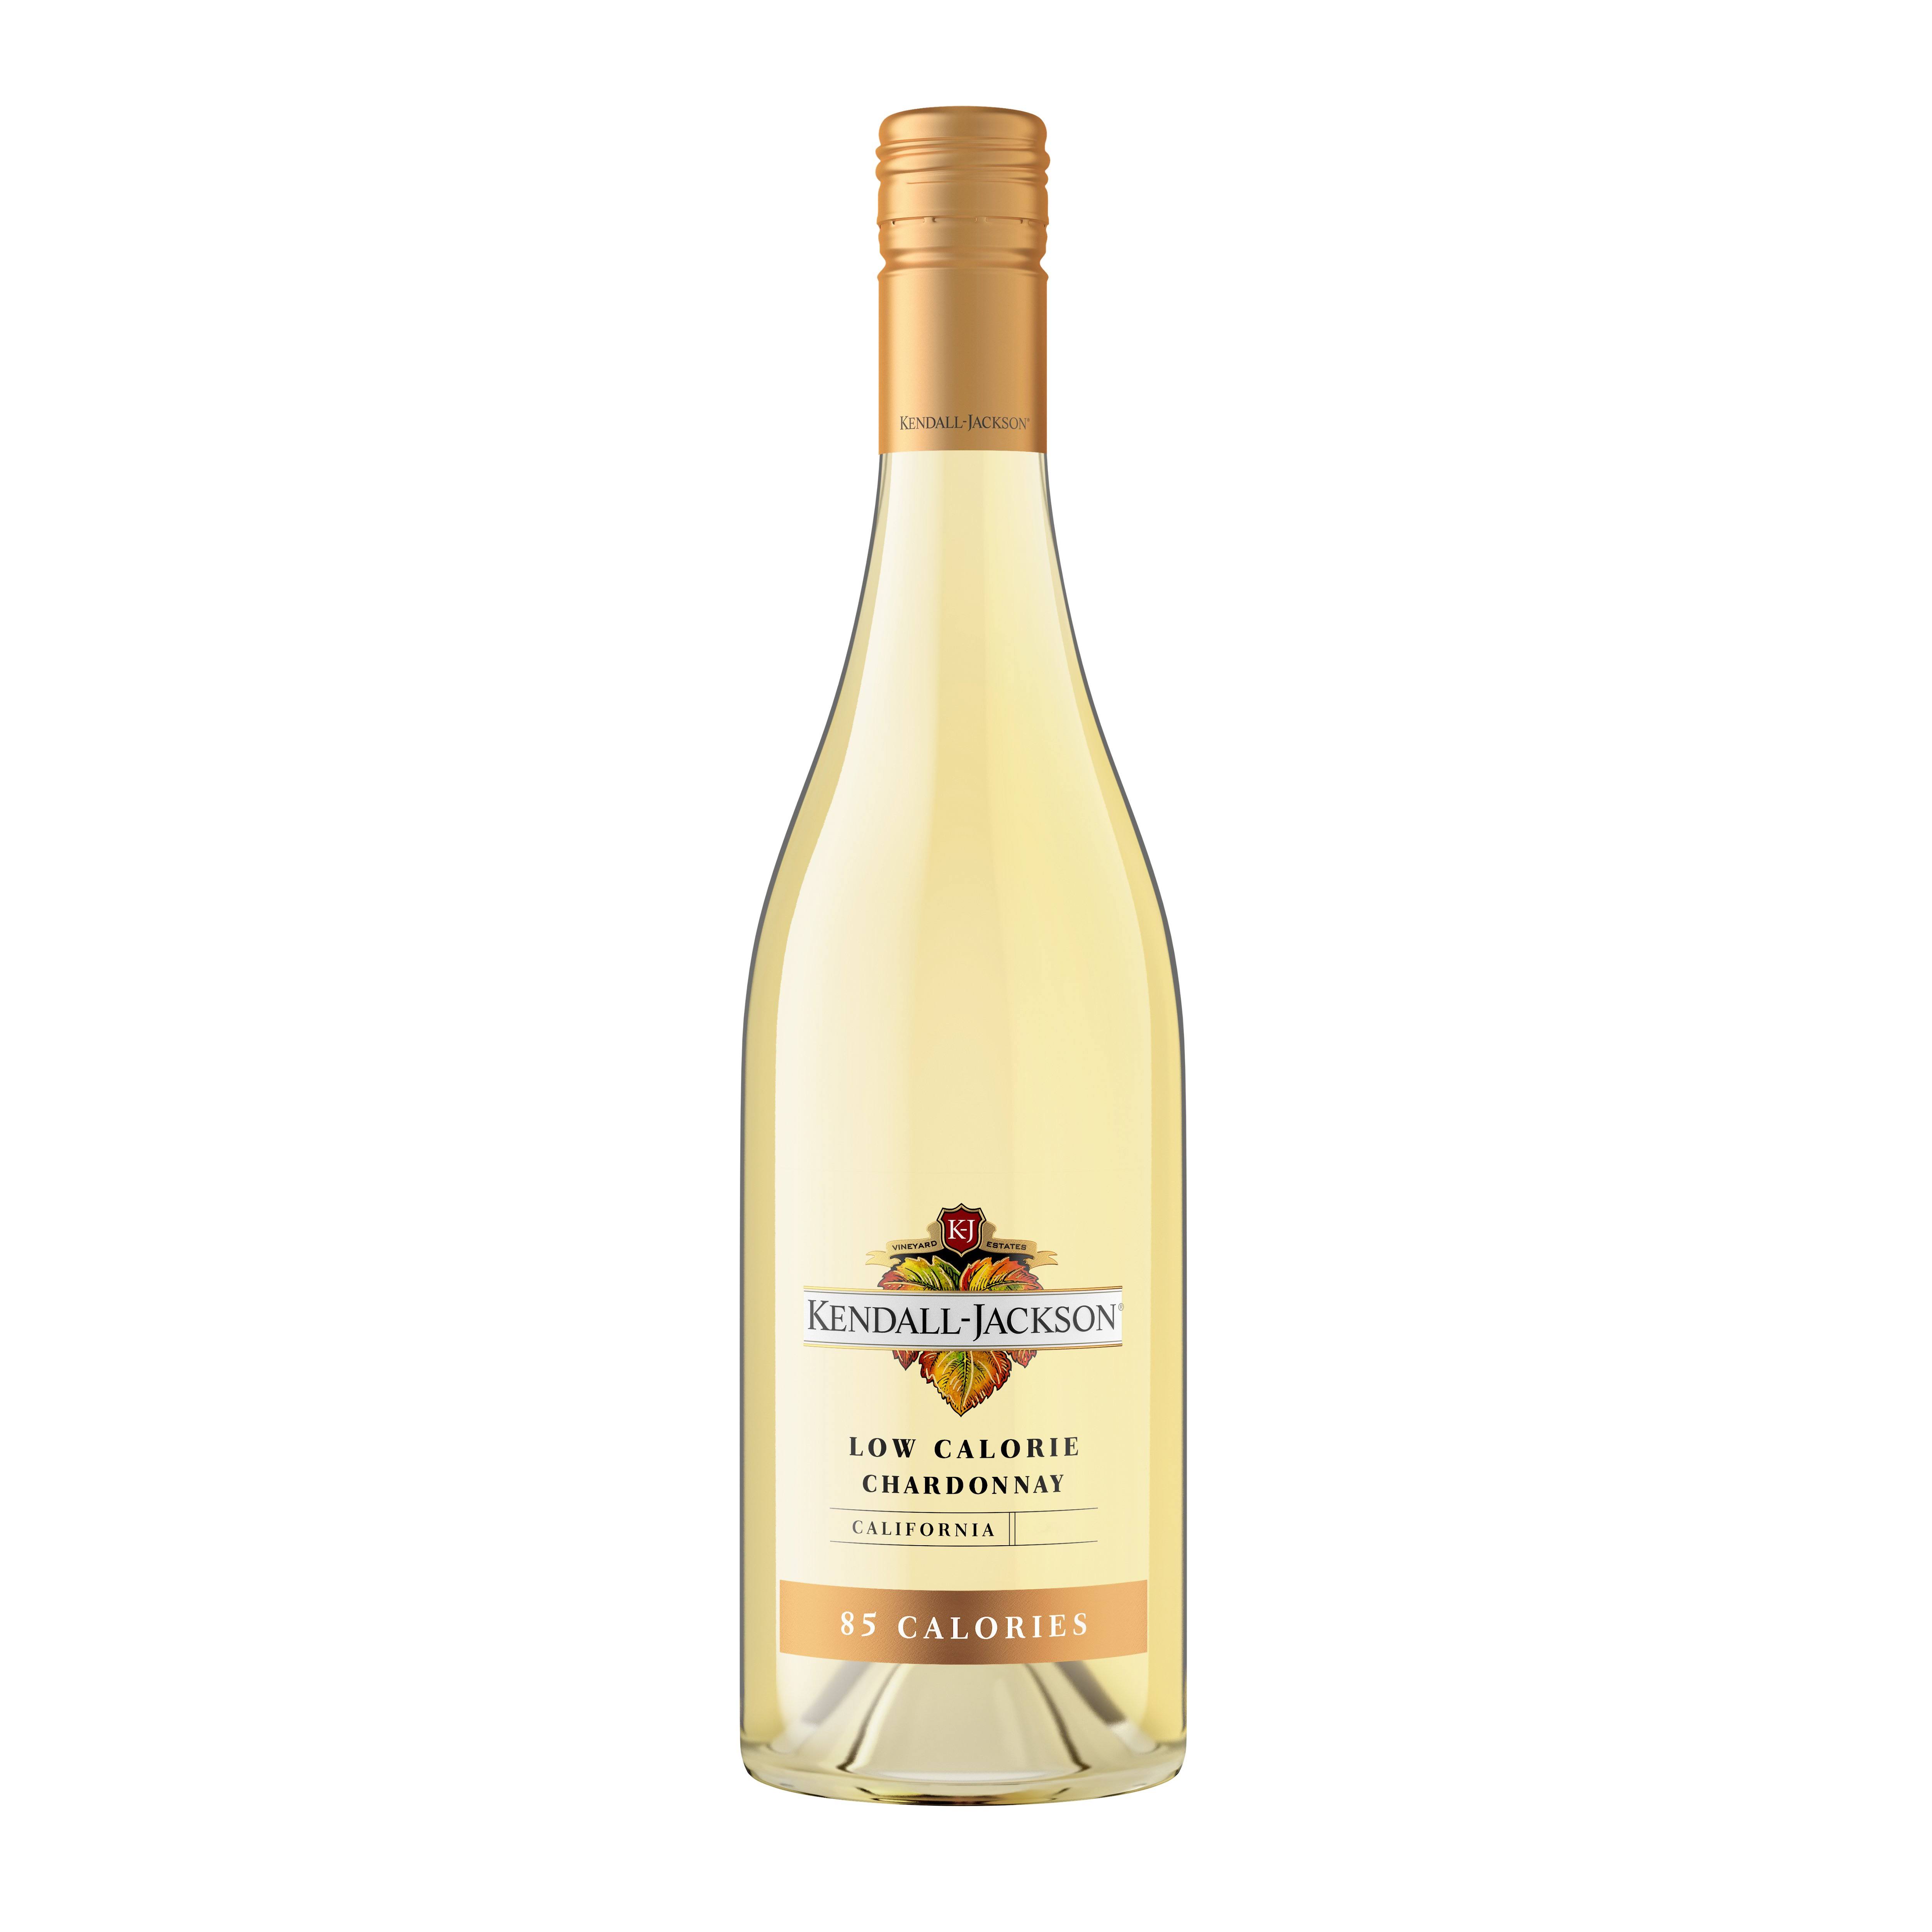 Kendall-Jackson Chardonnay, Lower Calorie, Avant, California - 750 ml